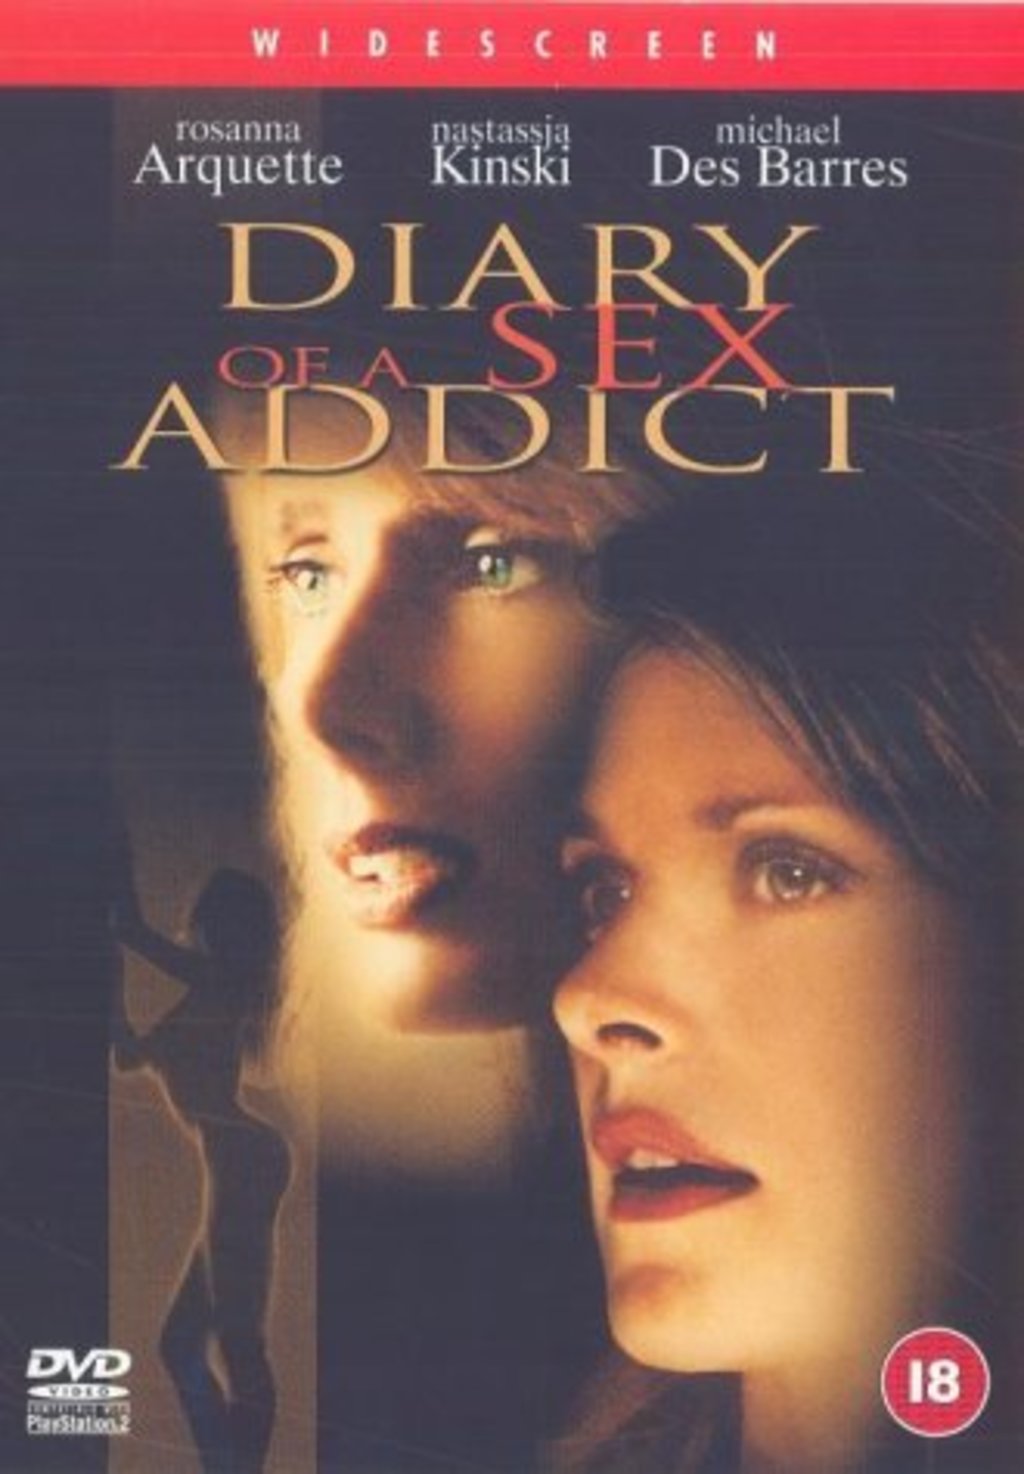 Diary of a sex addict 2001